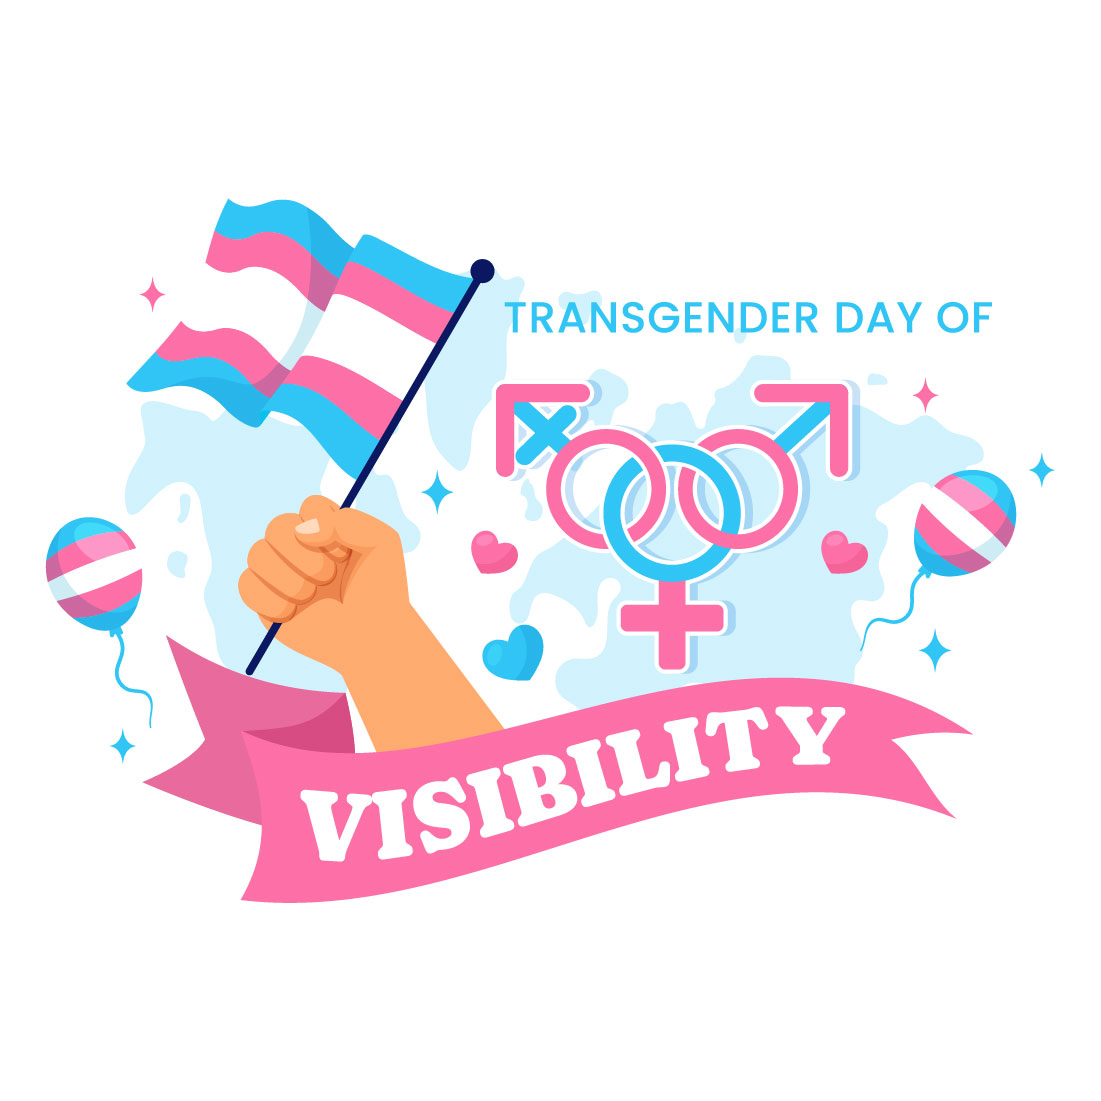 13 International Transgender Day of Visibility Illustration preview image.